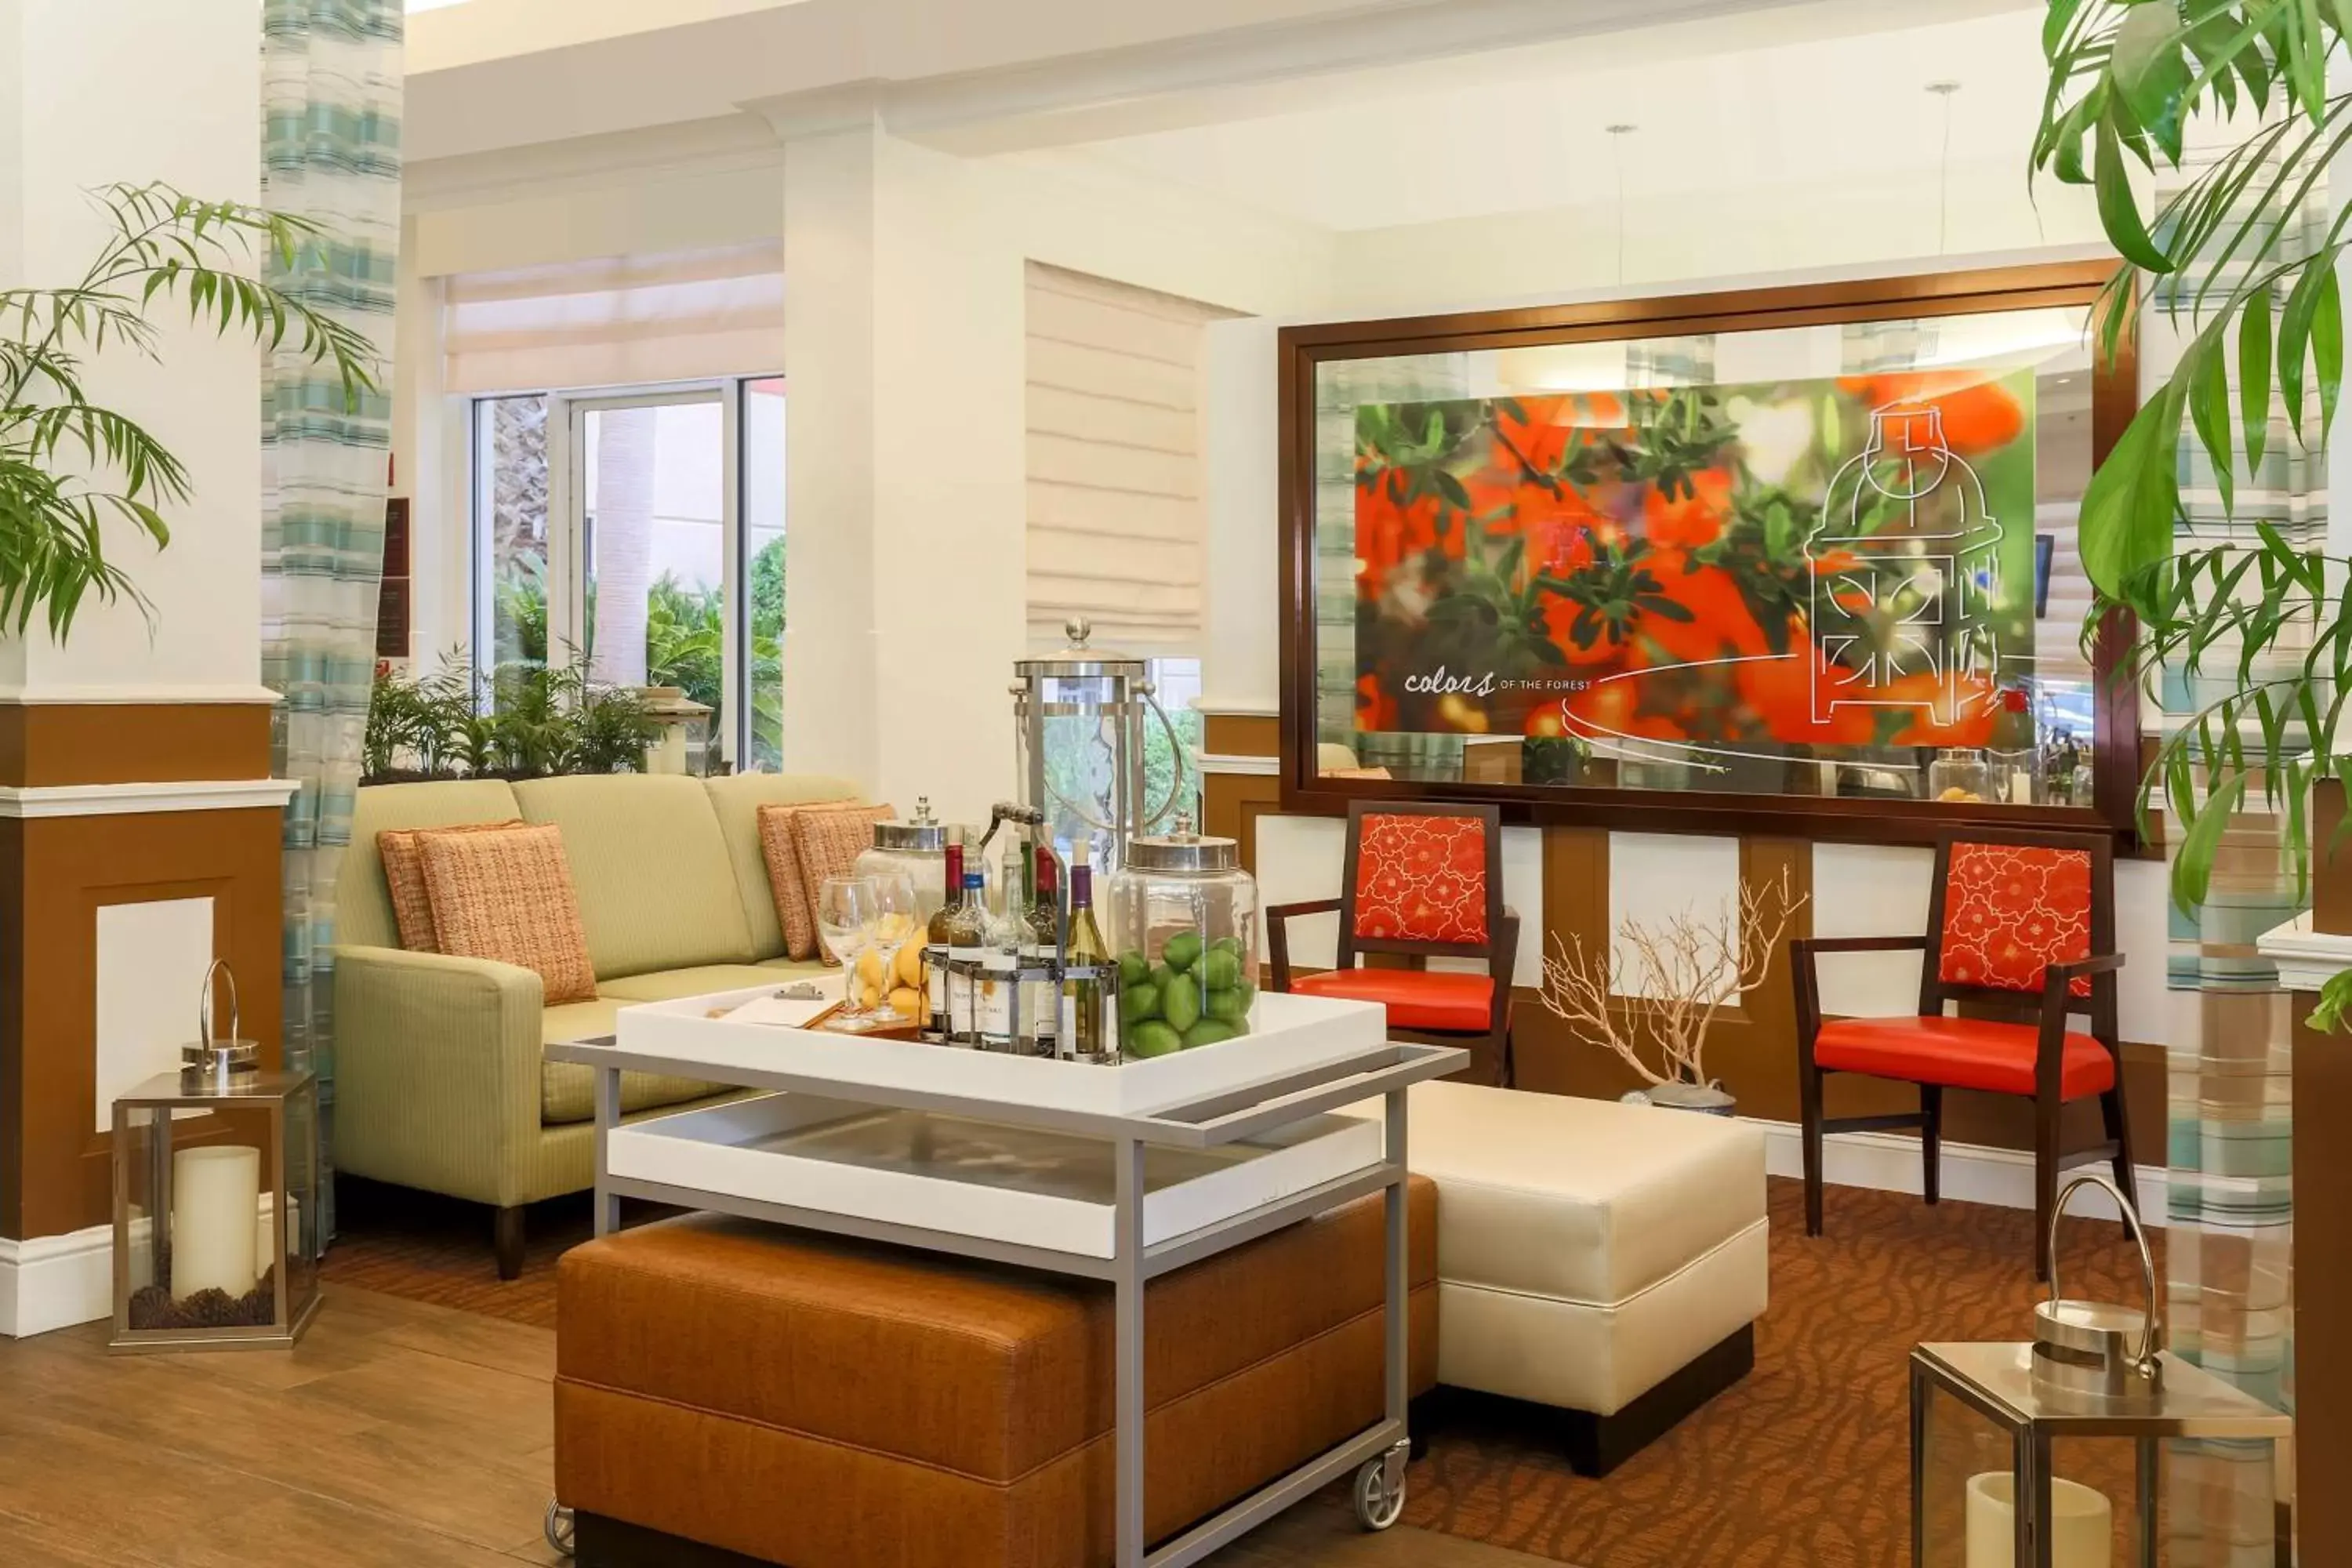 Lobby or reception in Hilton Garden Inn Tallahassee